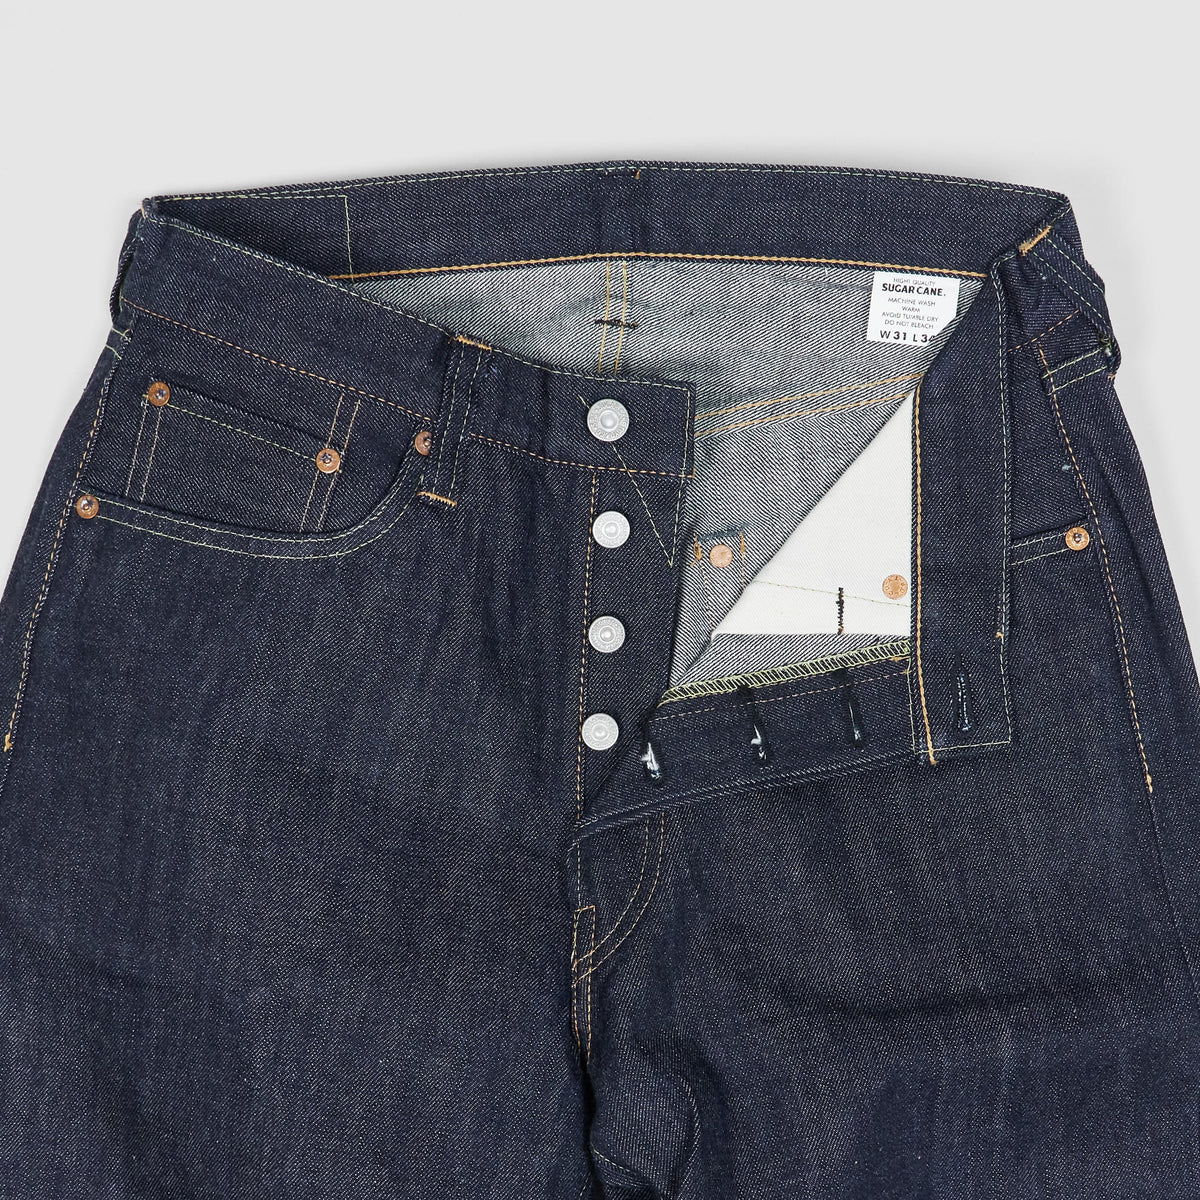 Sugar Cane 1947 Classic Straight Denim Jeans